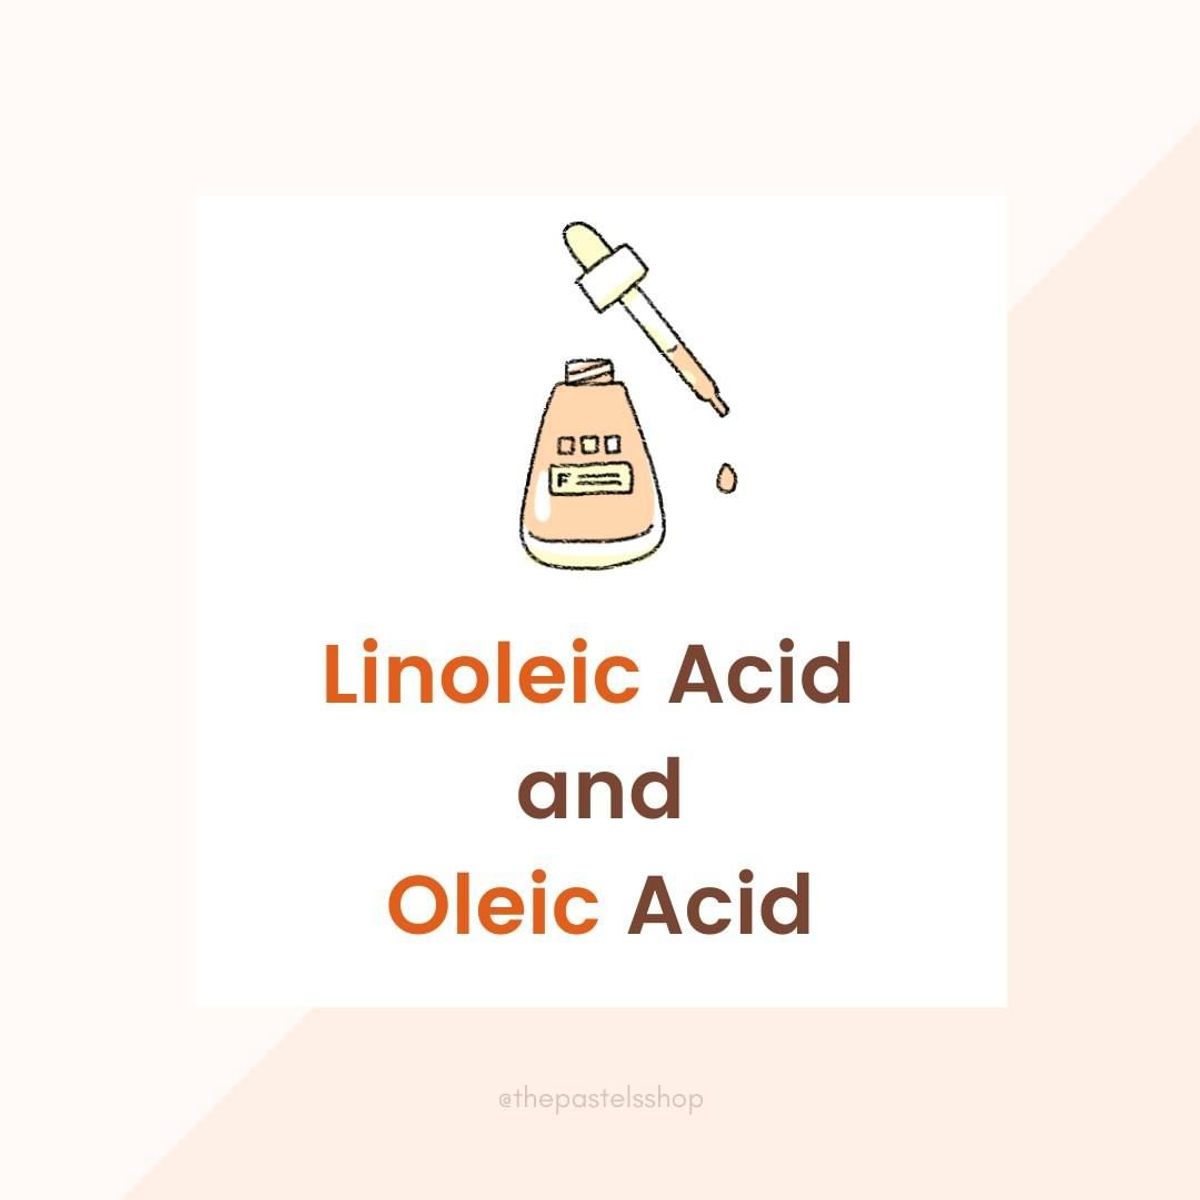 What is Linoleic Acid & Oleic Acid?